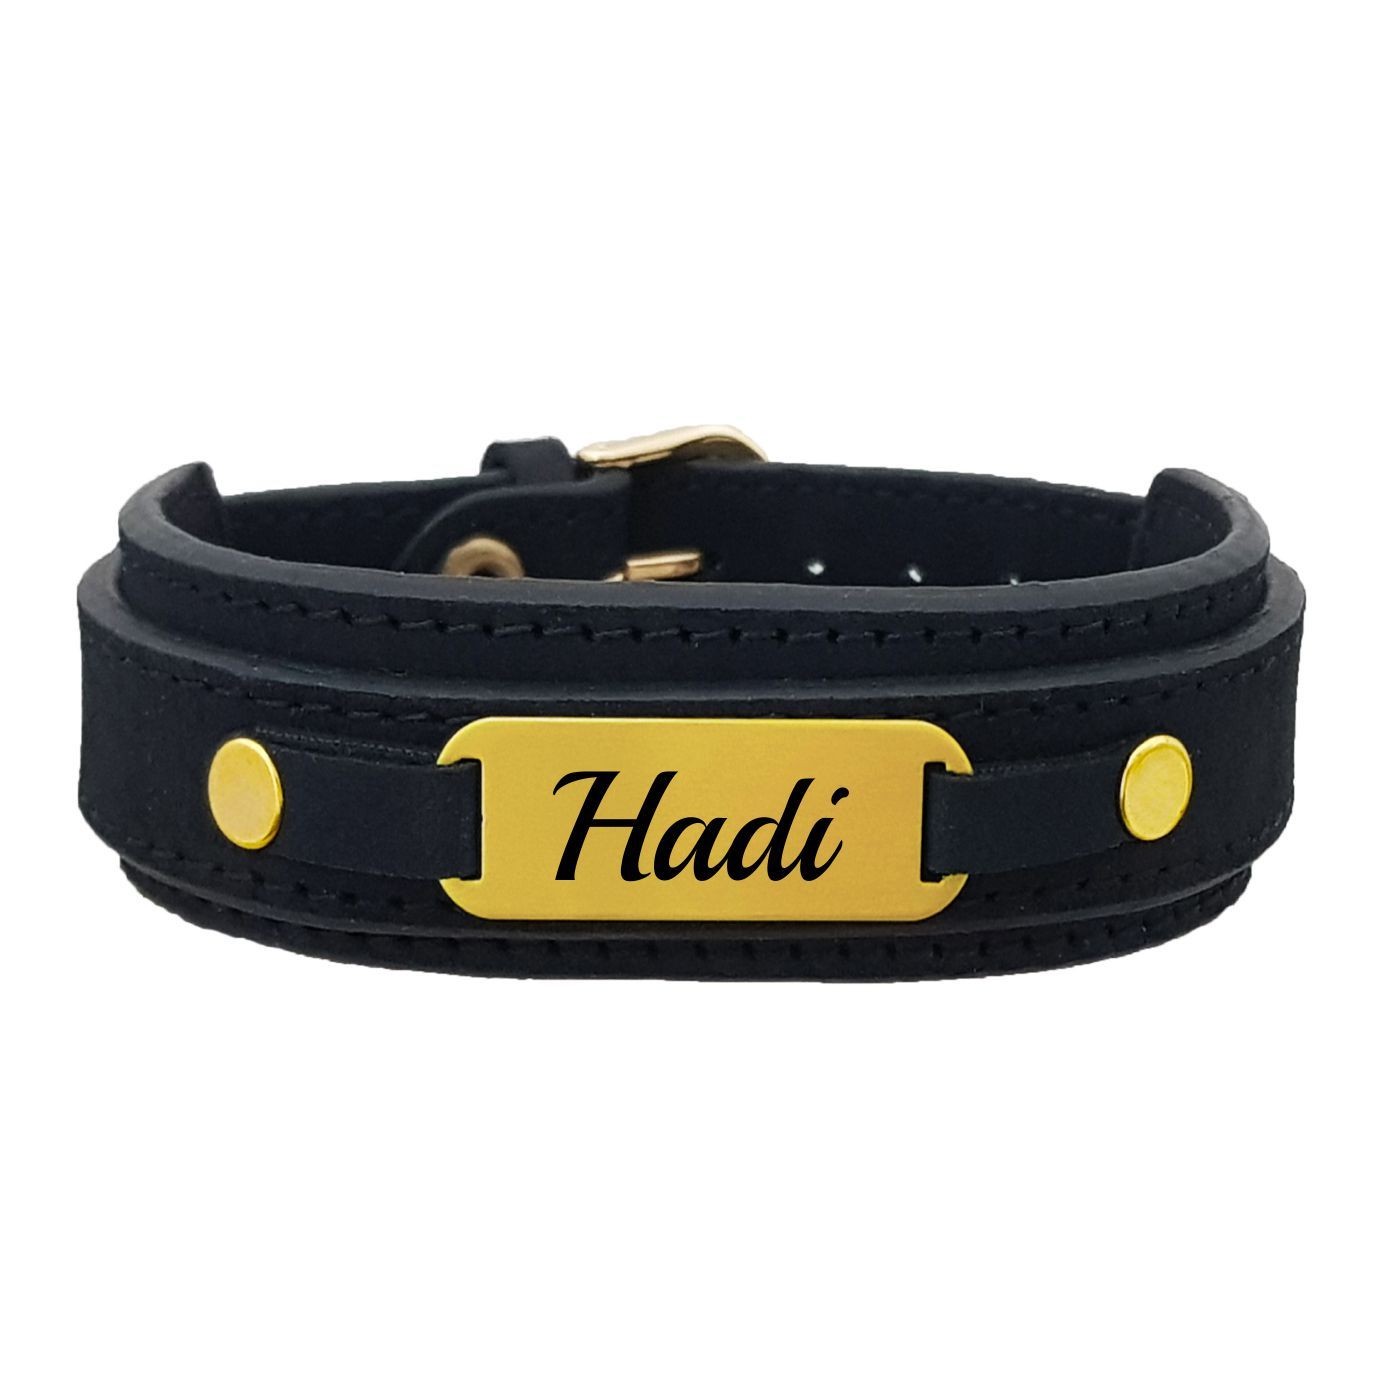 دستبند نقره مردانه لیردا مدل هادی کد 0386 DCHNT -  - 1